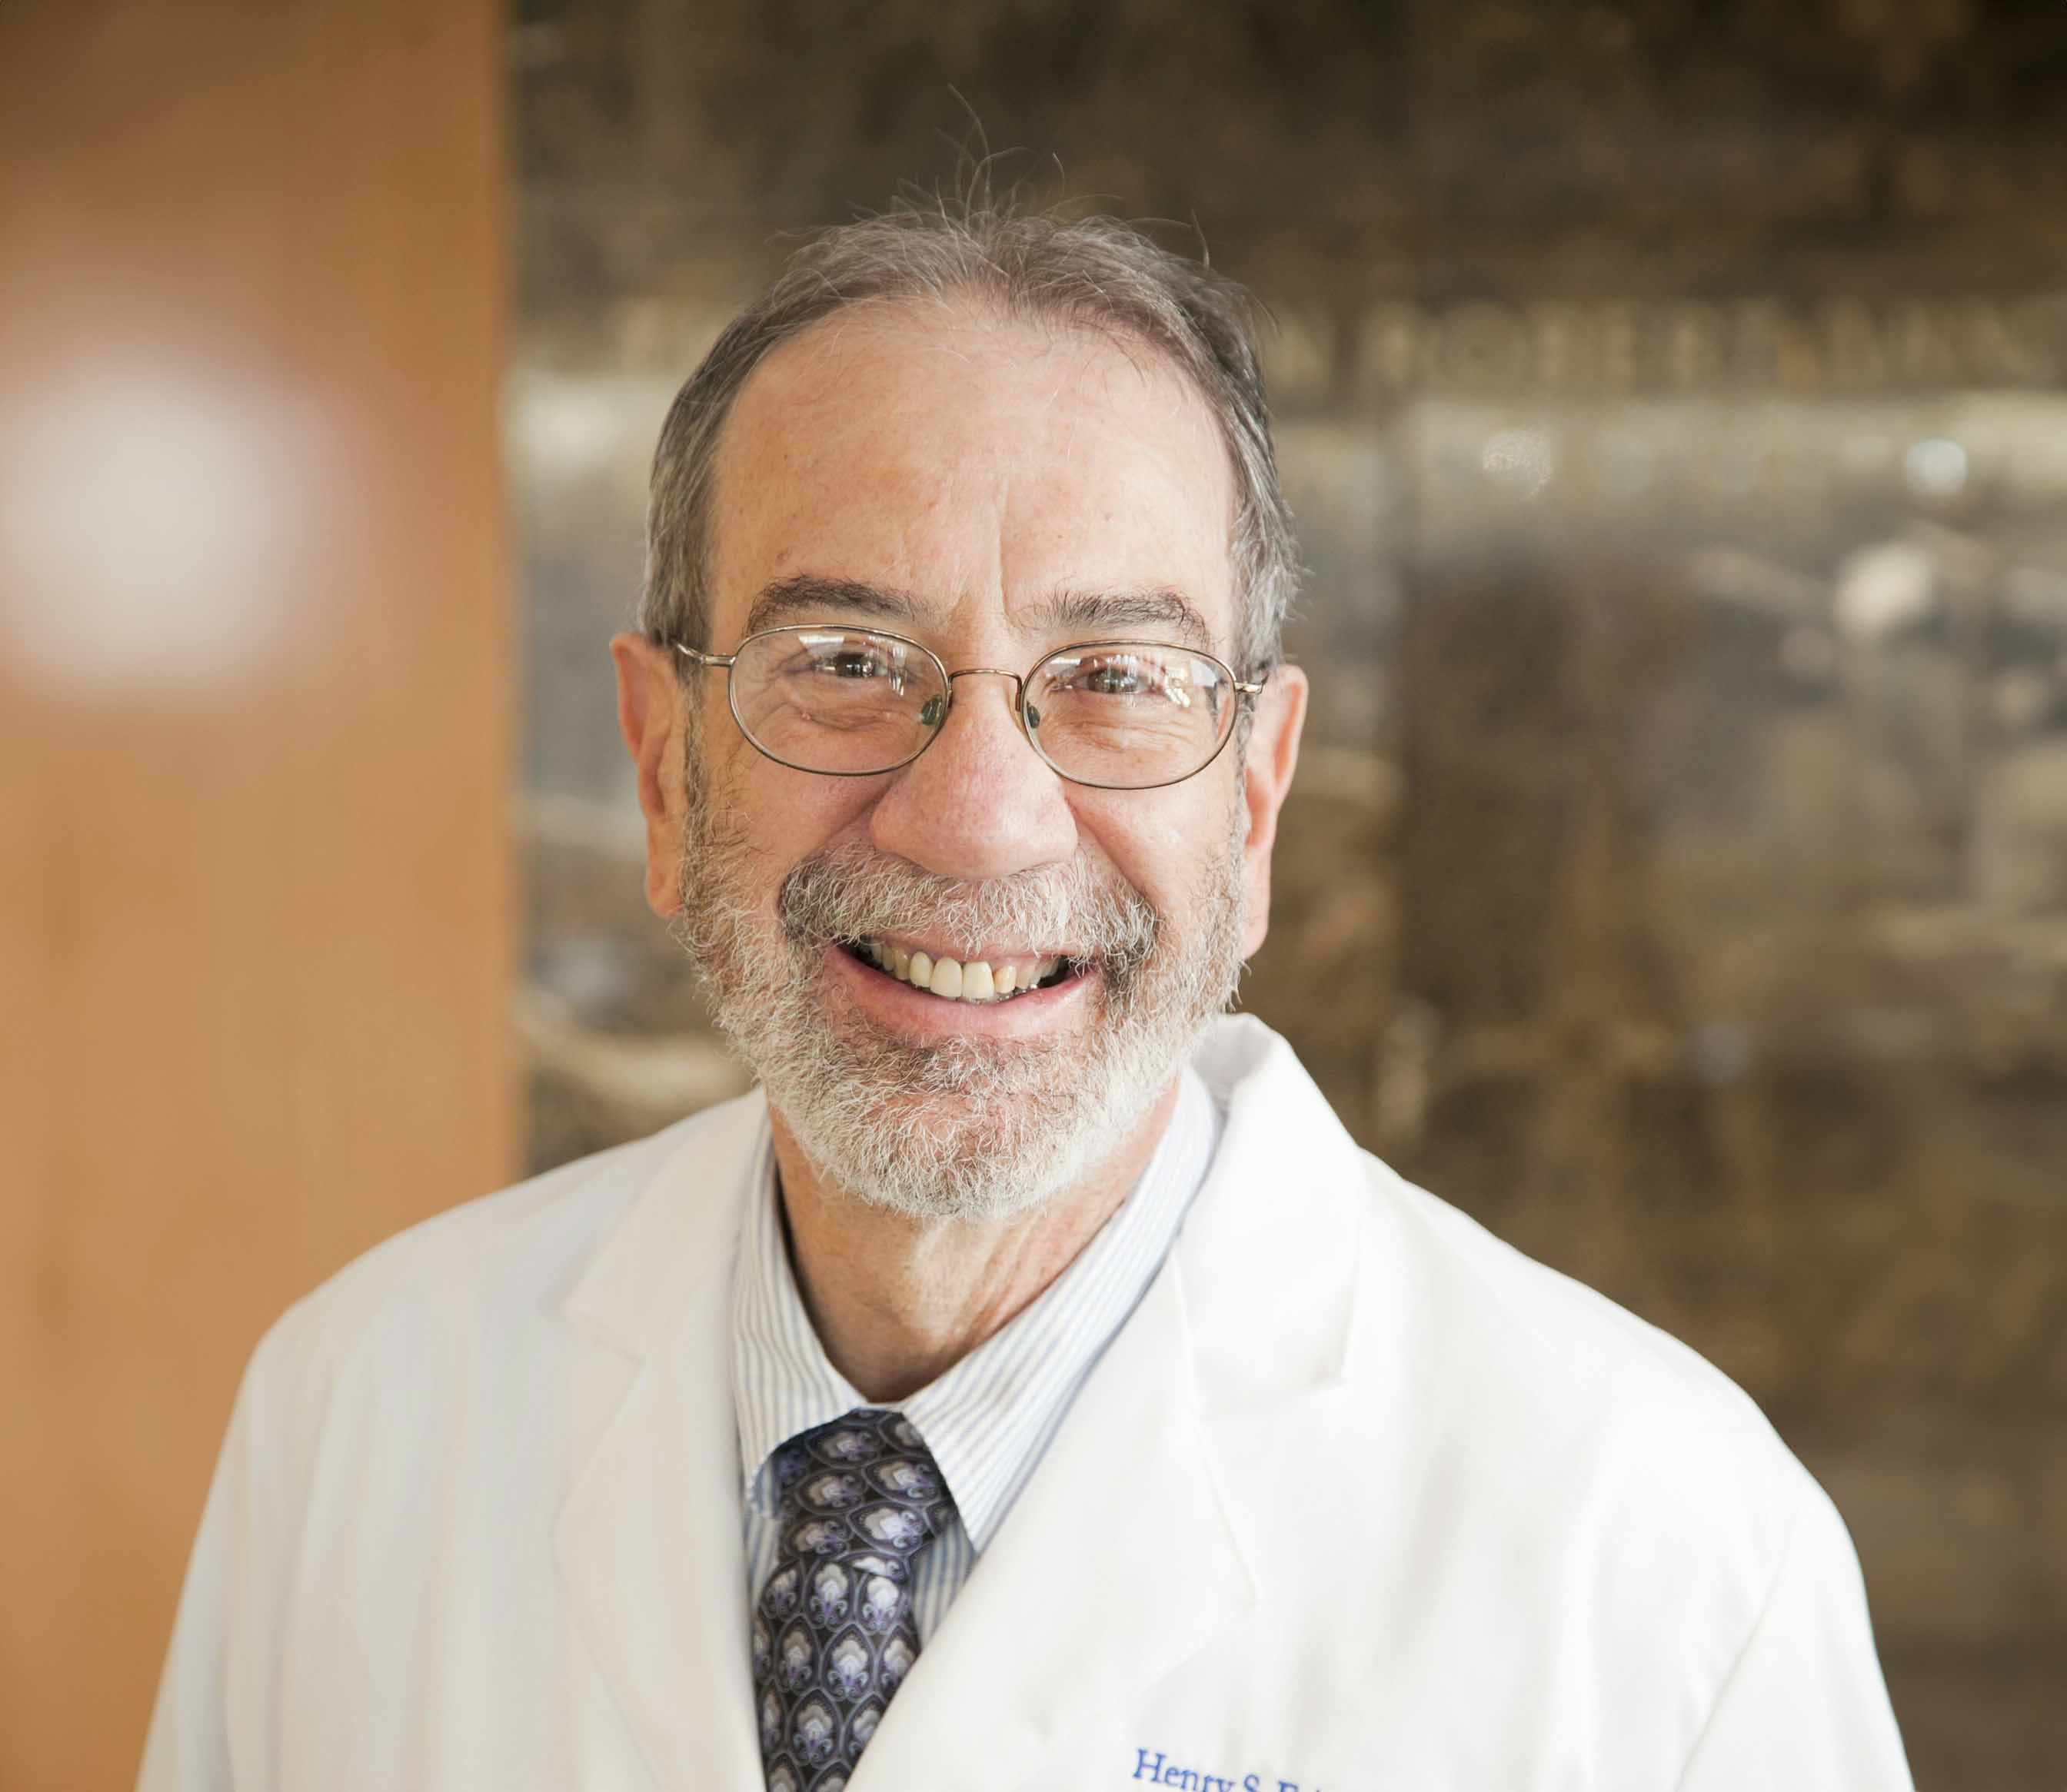 Dr. Henry Friedman